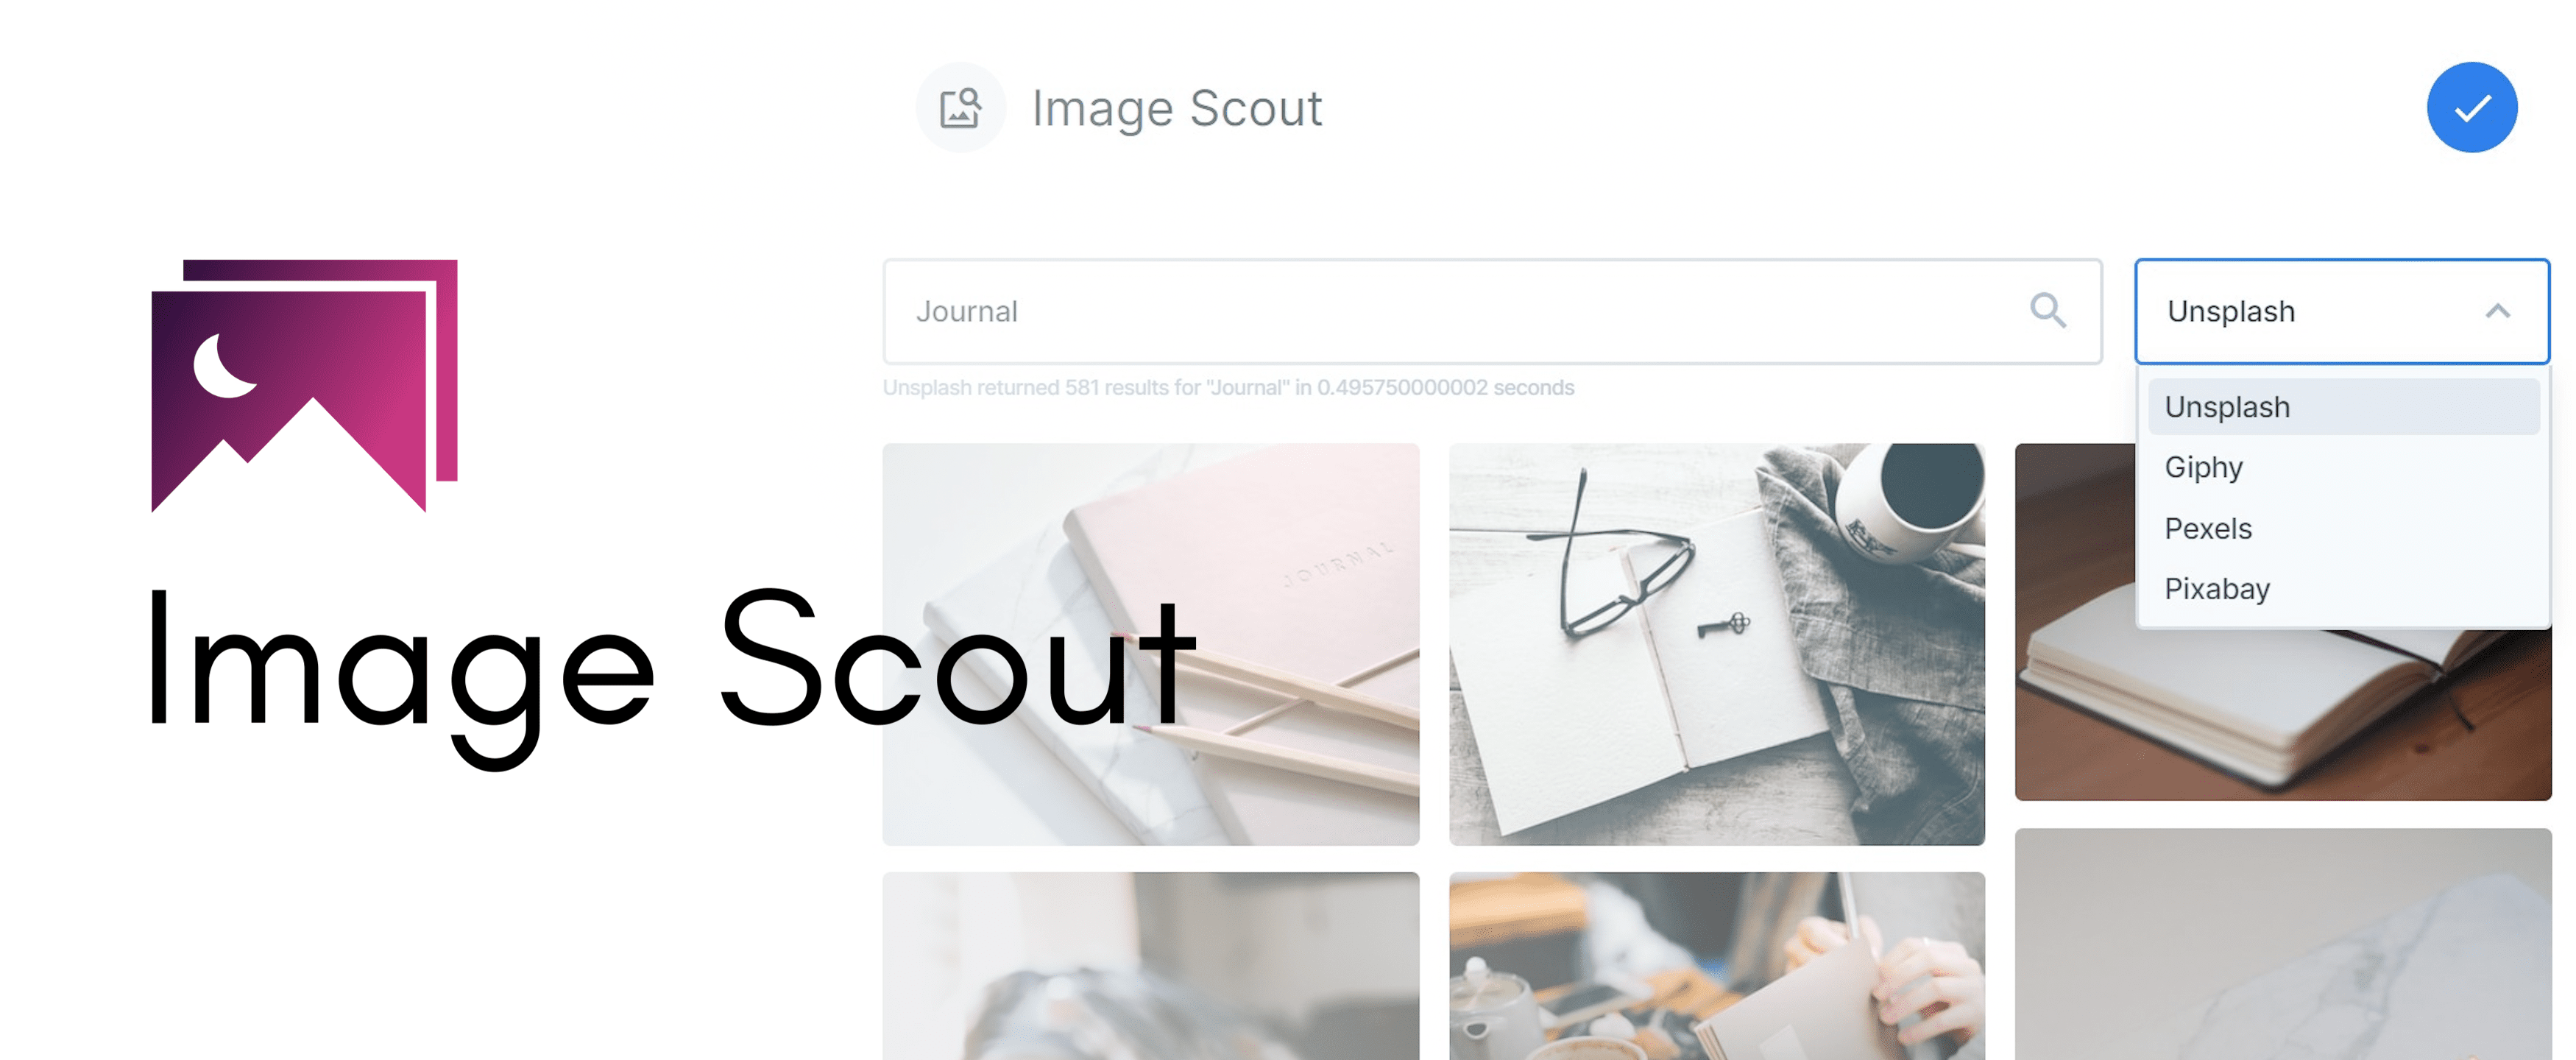 directus-image-scout